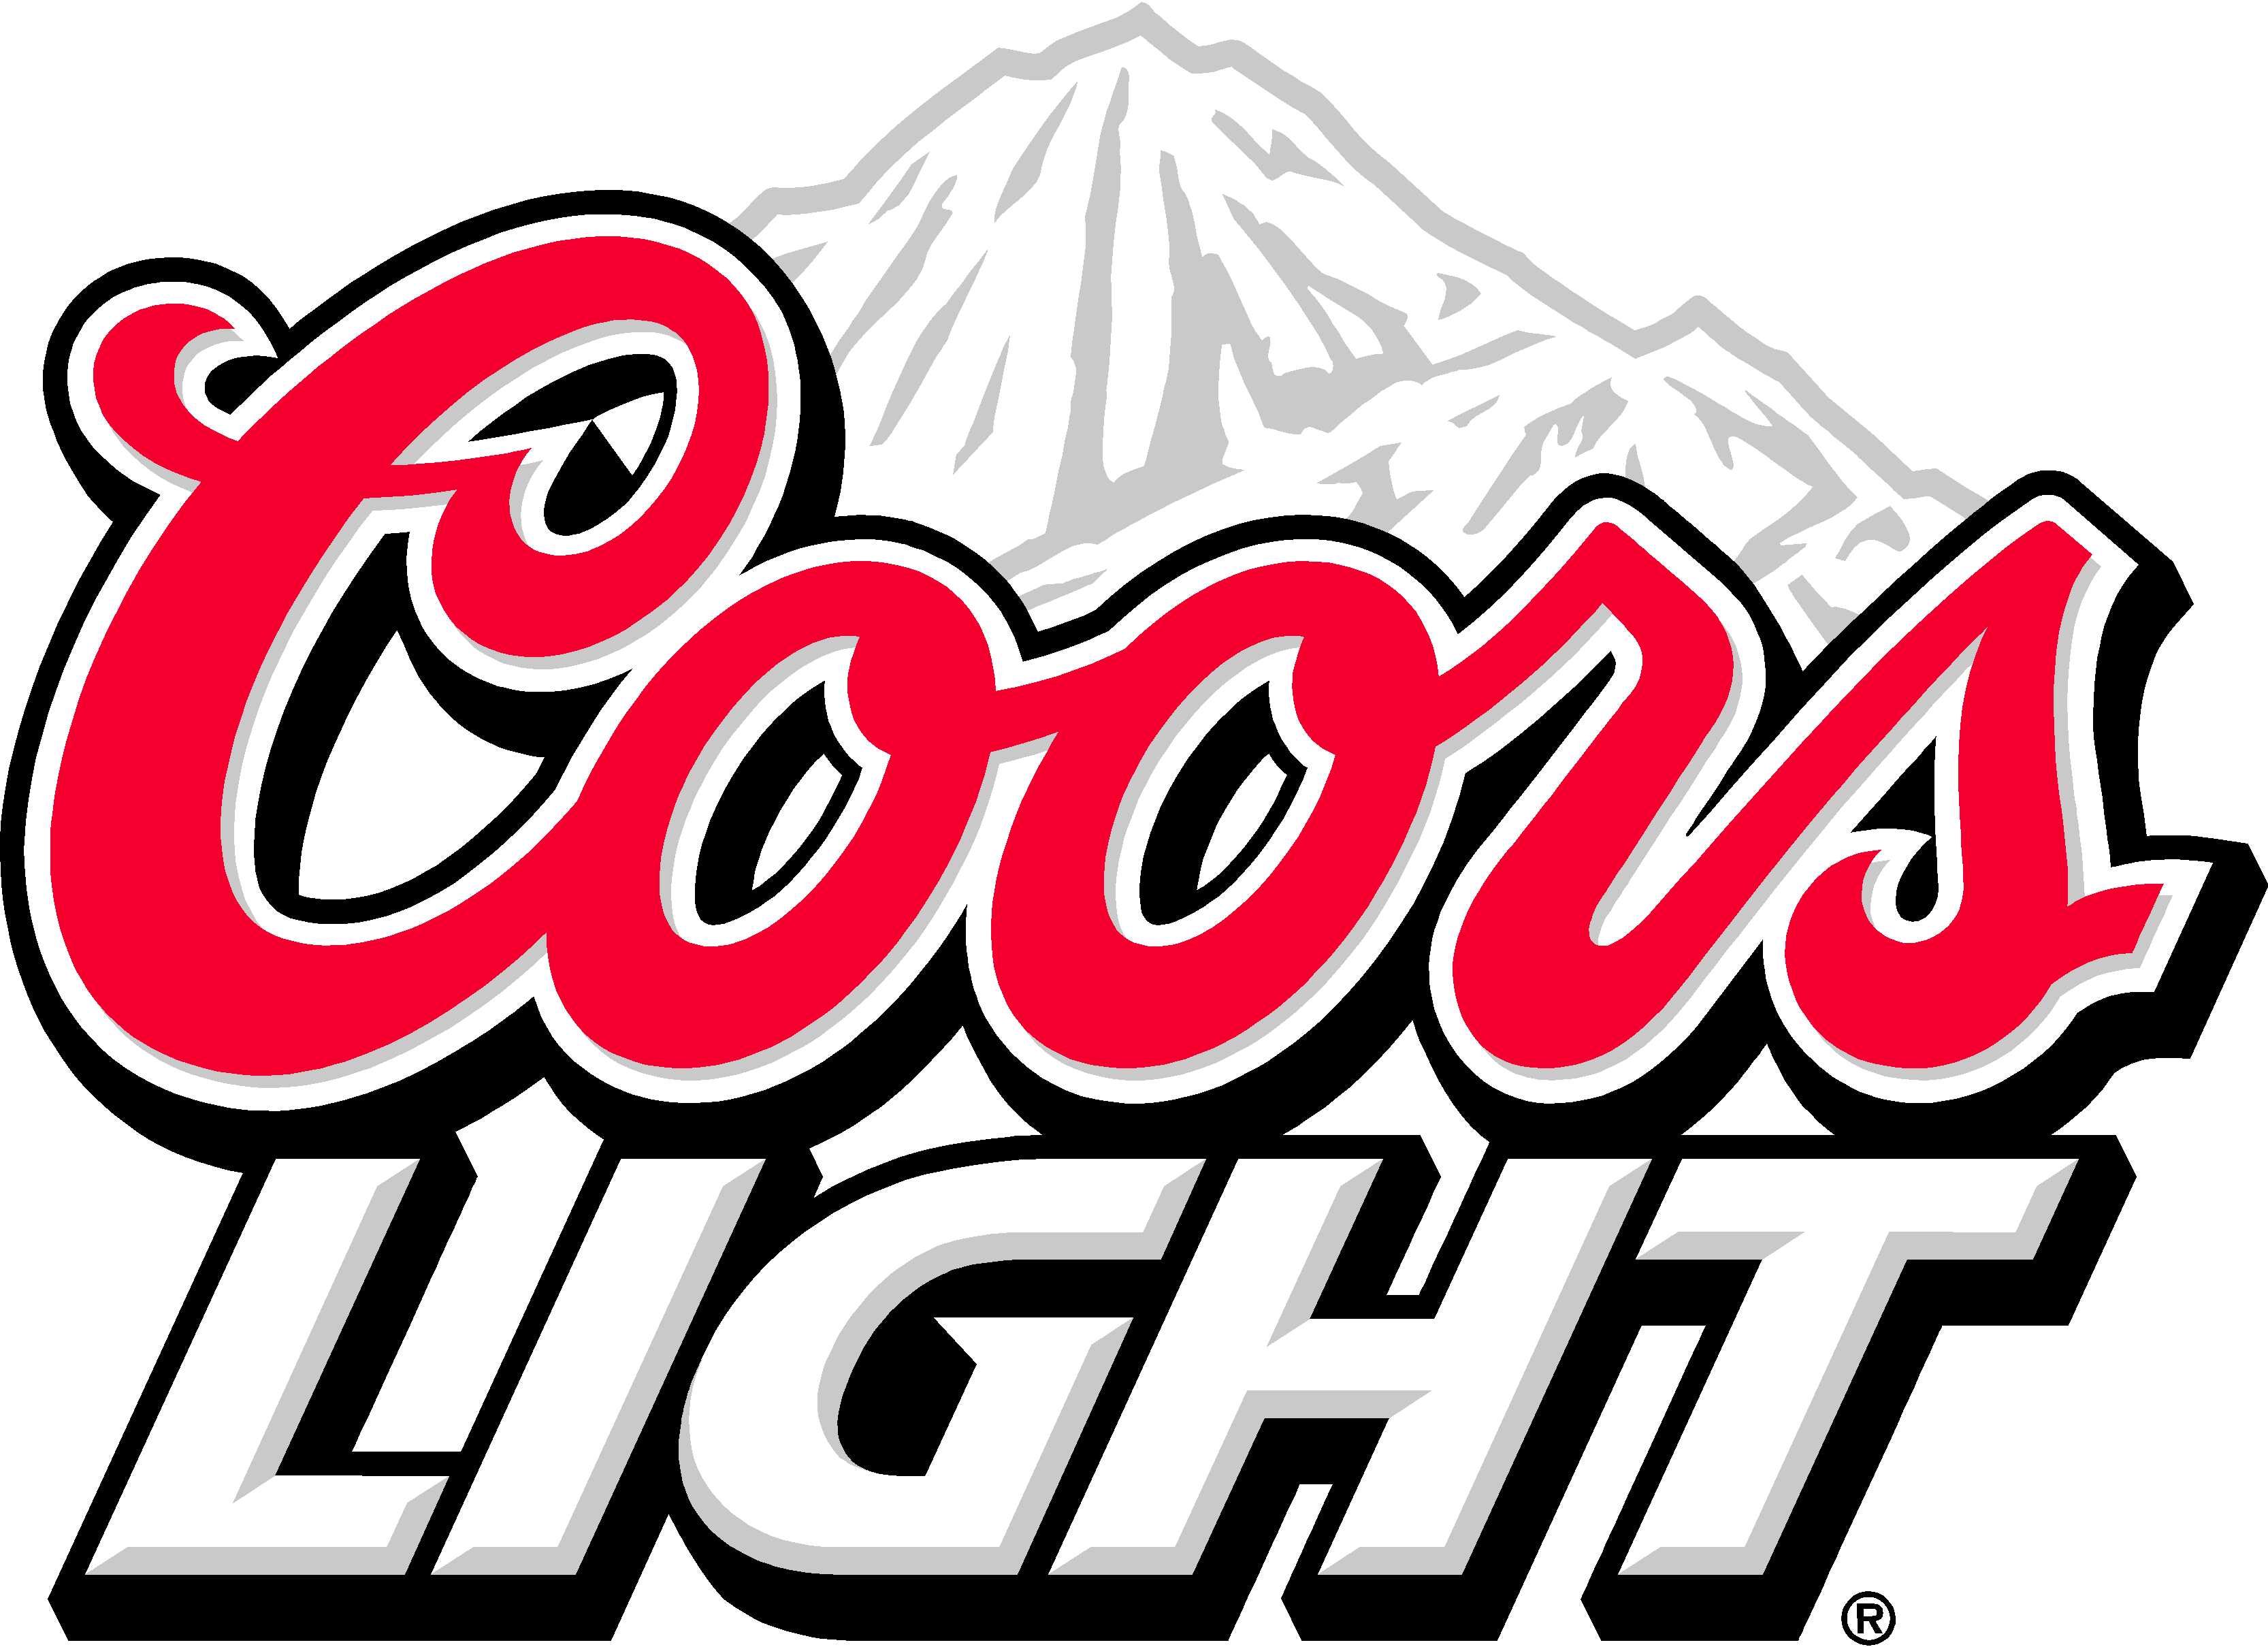 Miller Light Logo - Coors Light Logo PNG Transparent Coors Light Logo.PNG Images. | PlusPNG